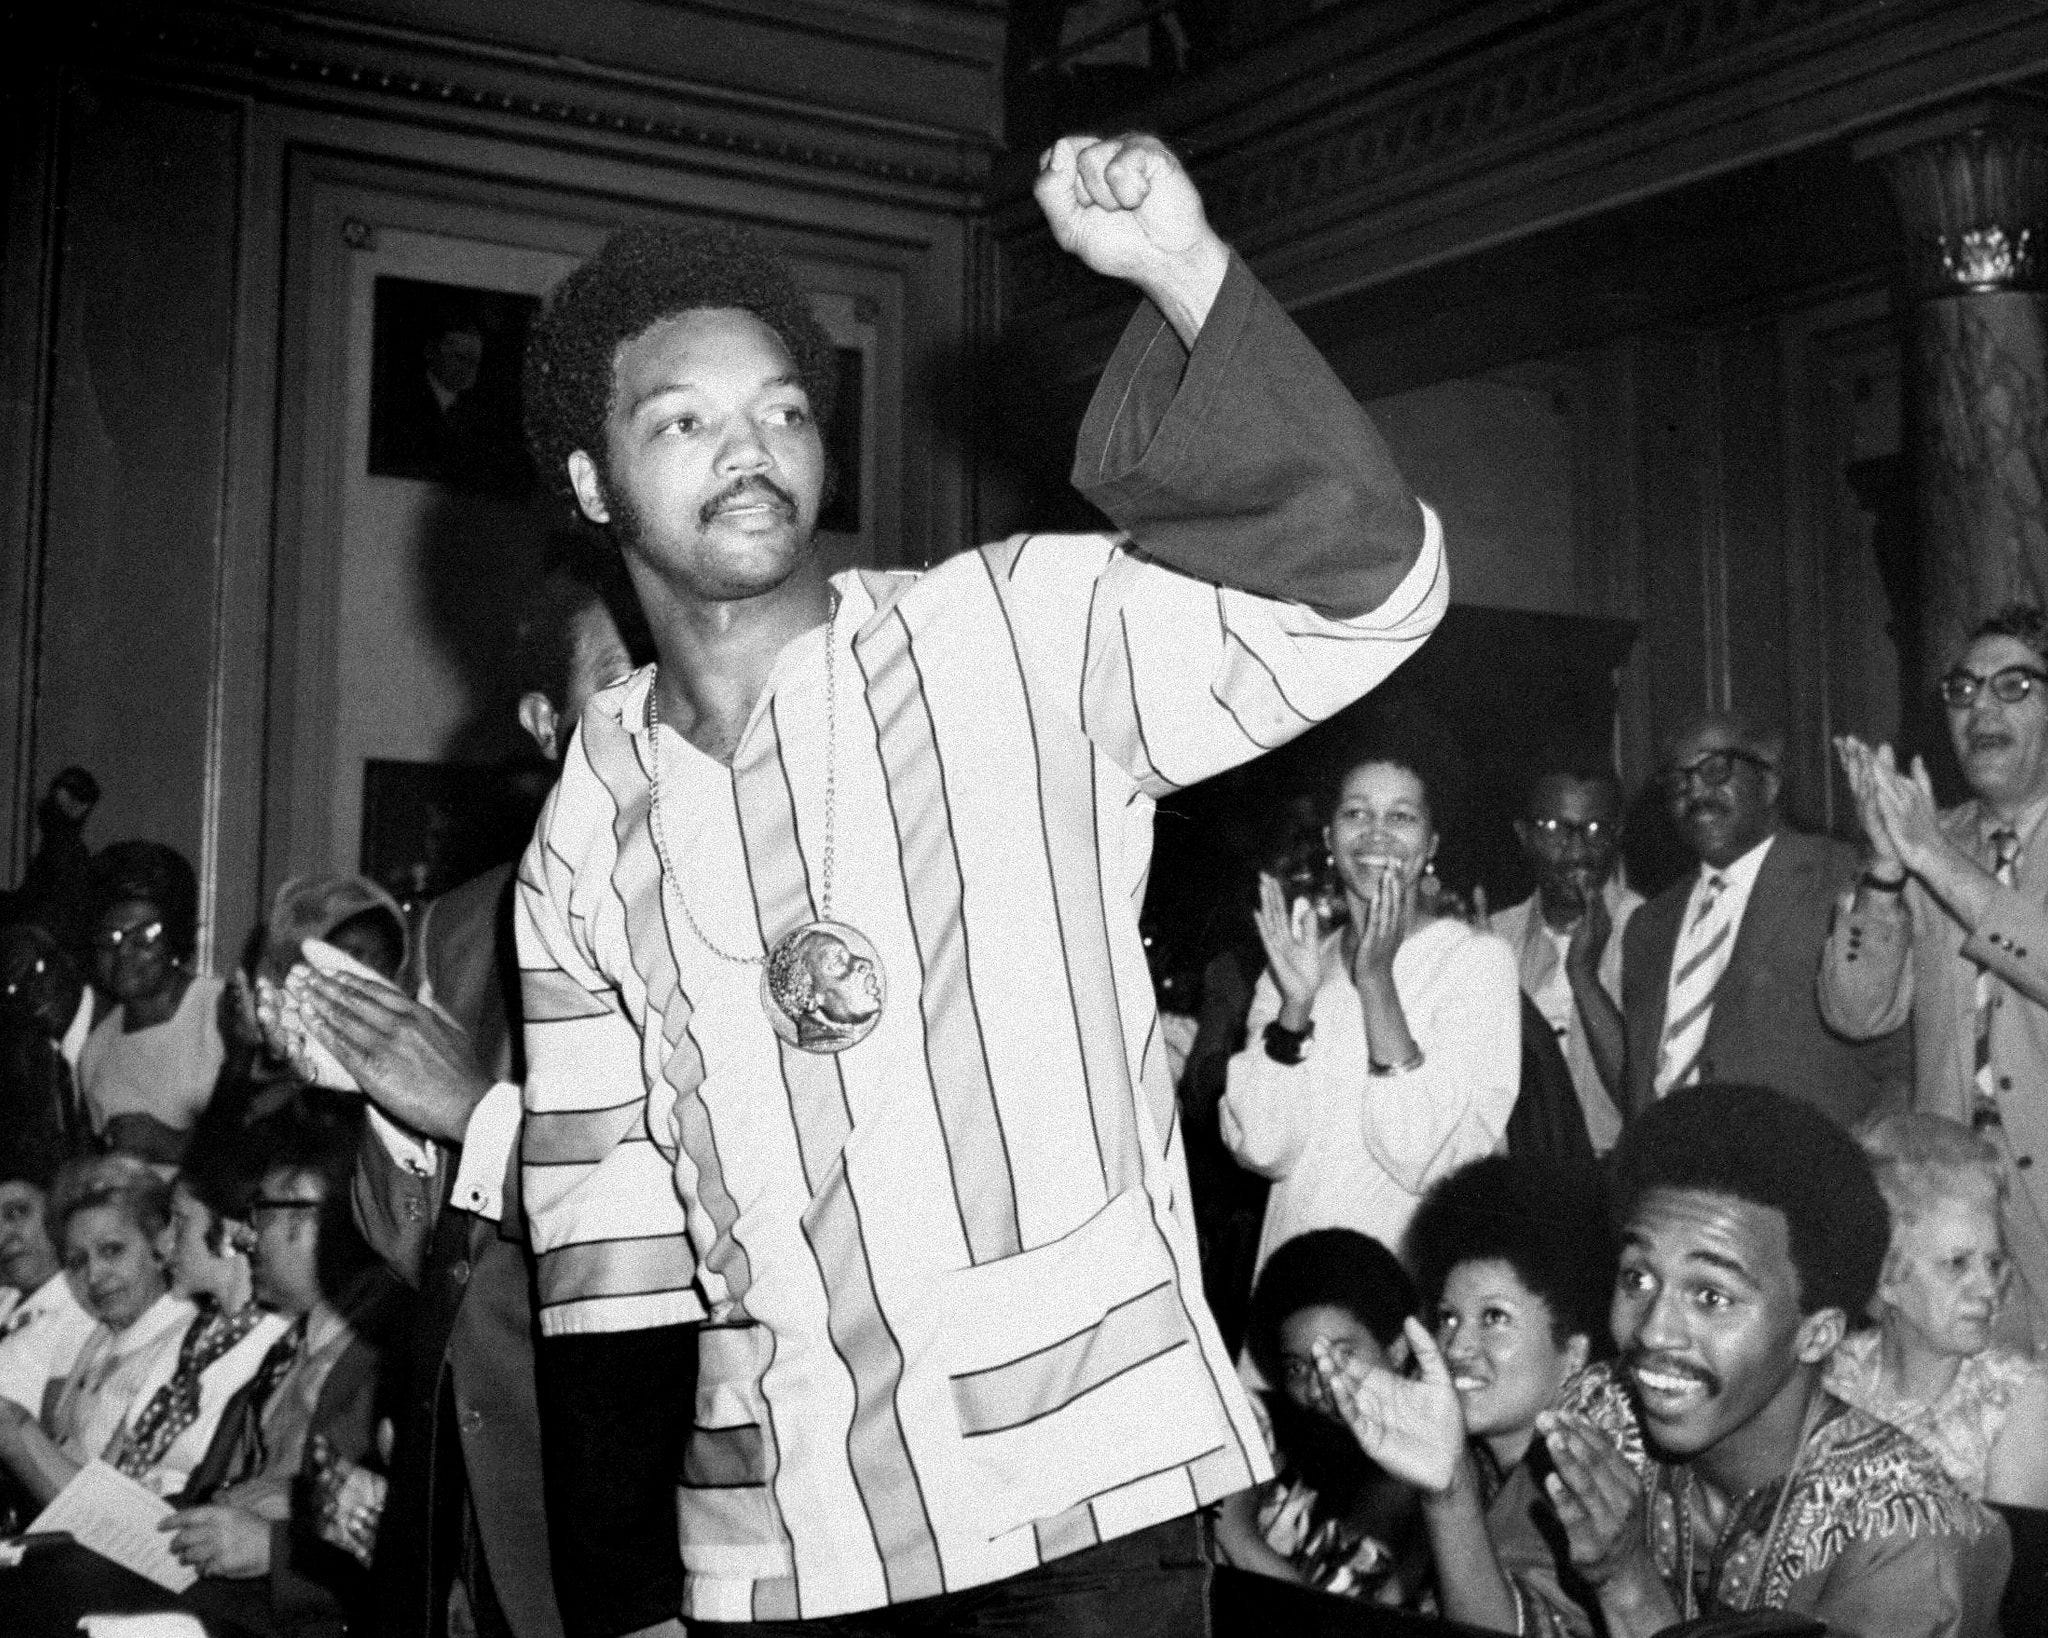 March 10, 1972: National Black Political Convention - Zinn